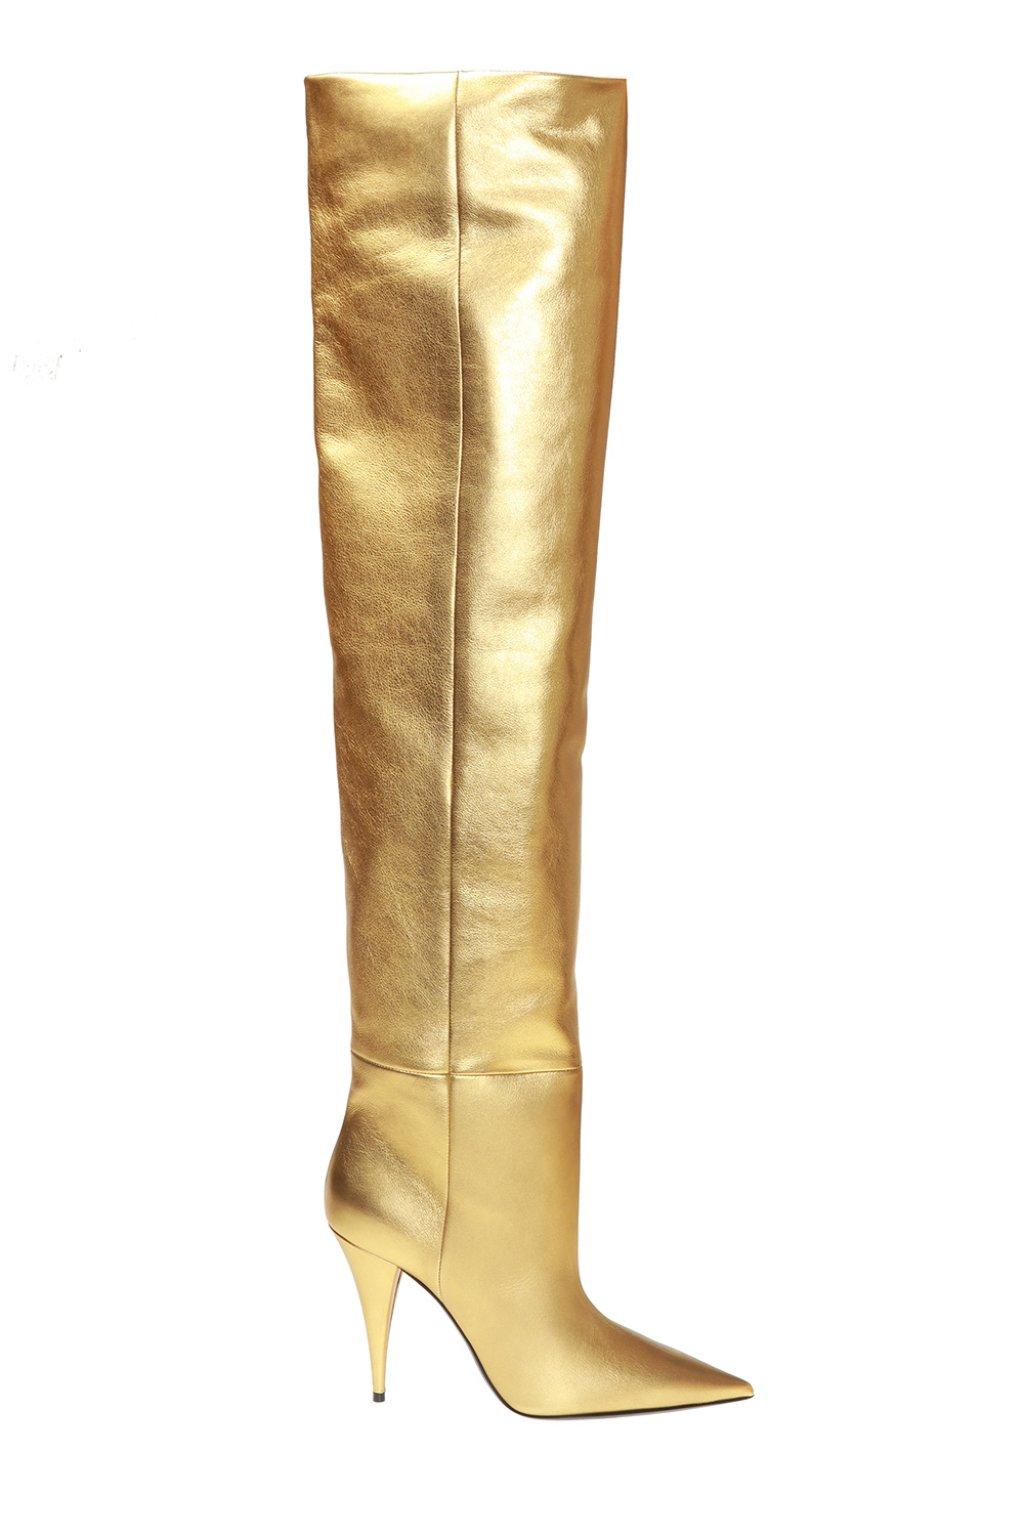 Saint Laurent 'kiki' Leather Boots Gold in Metallic | Lyst